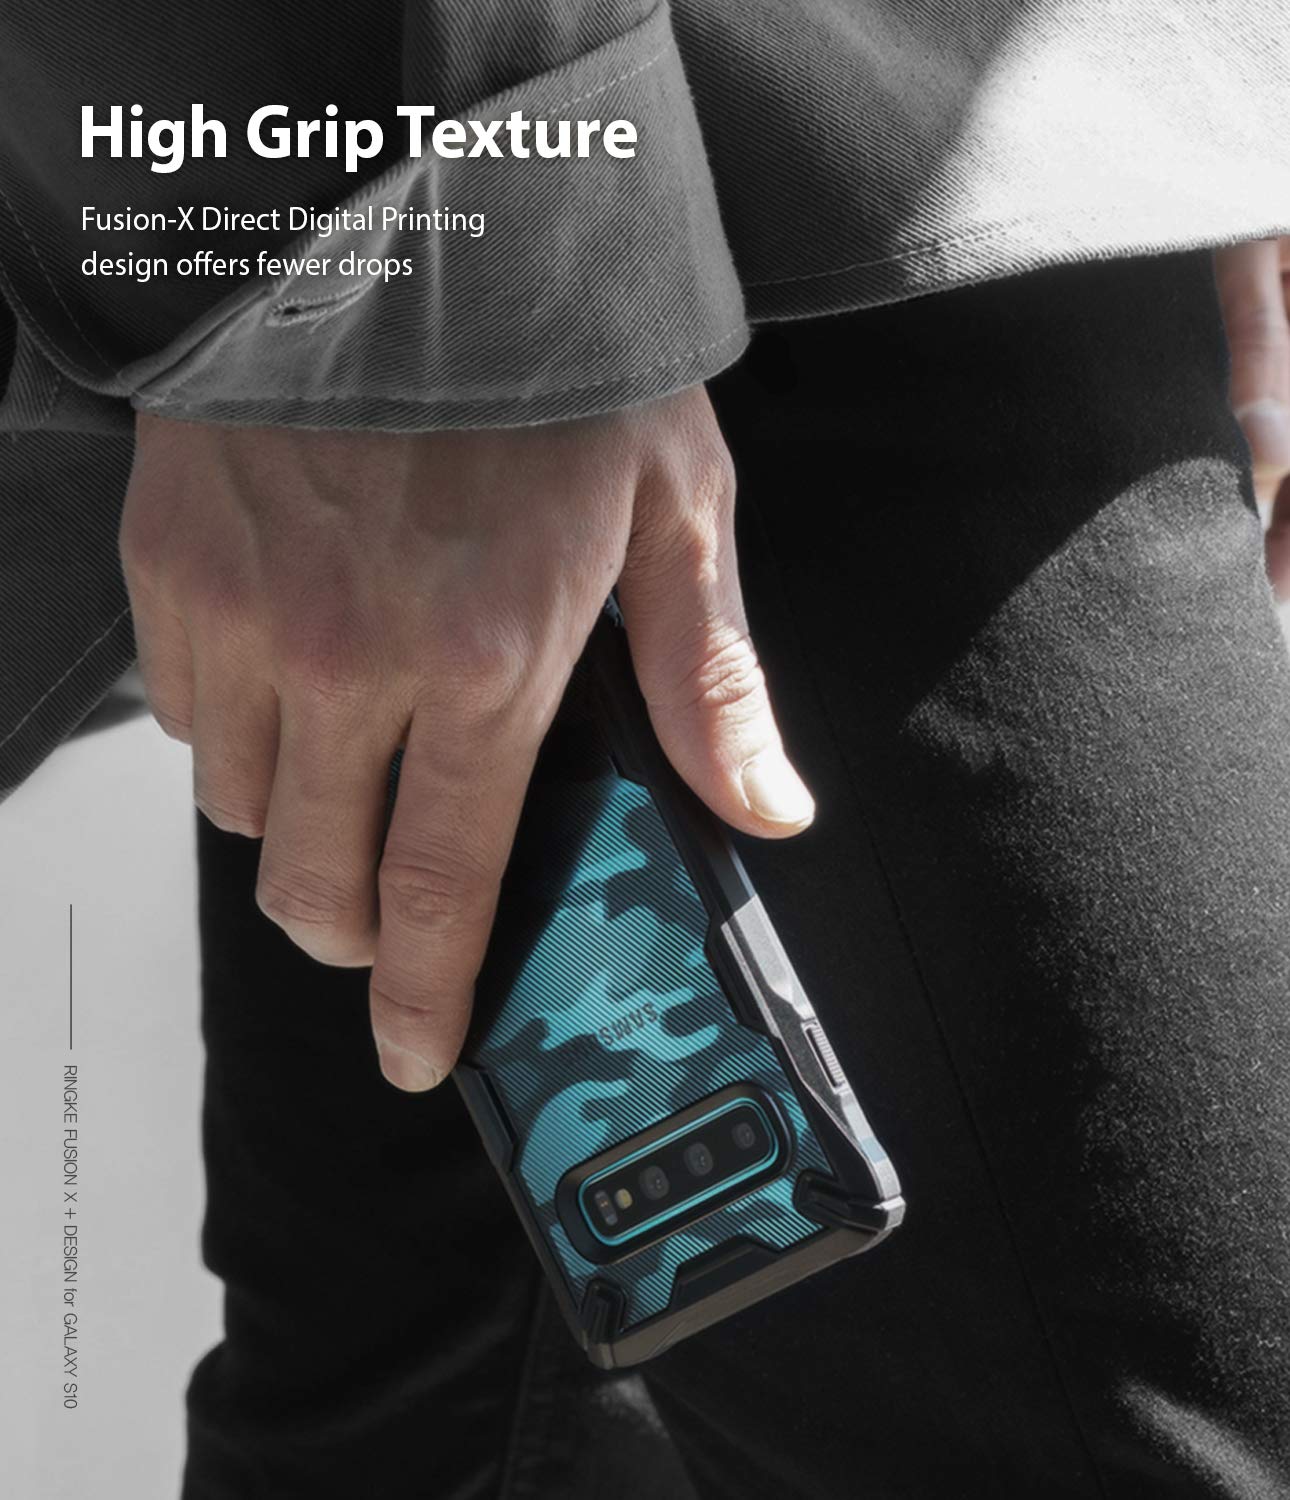 high grip texture ergonomic grip